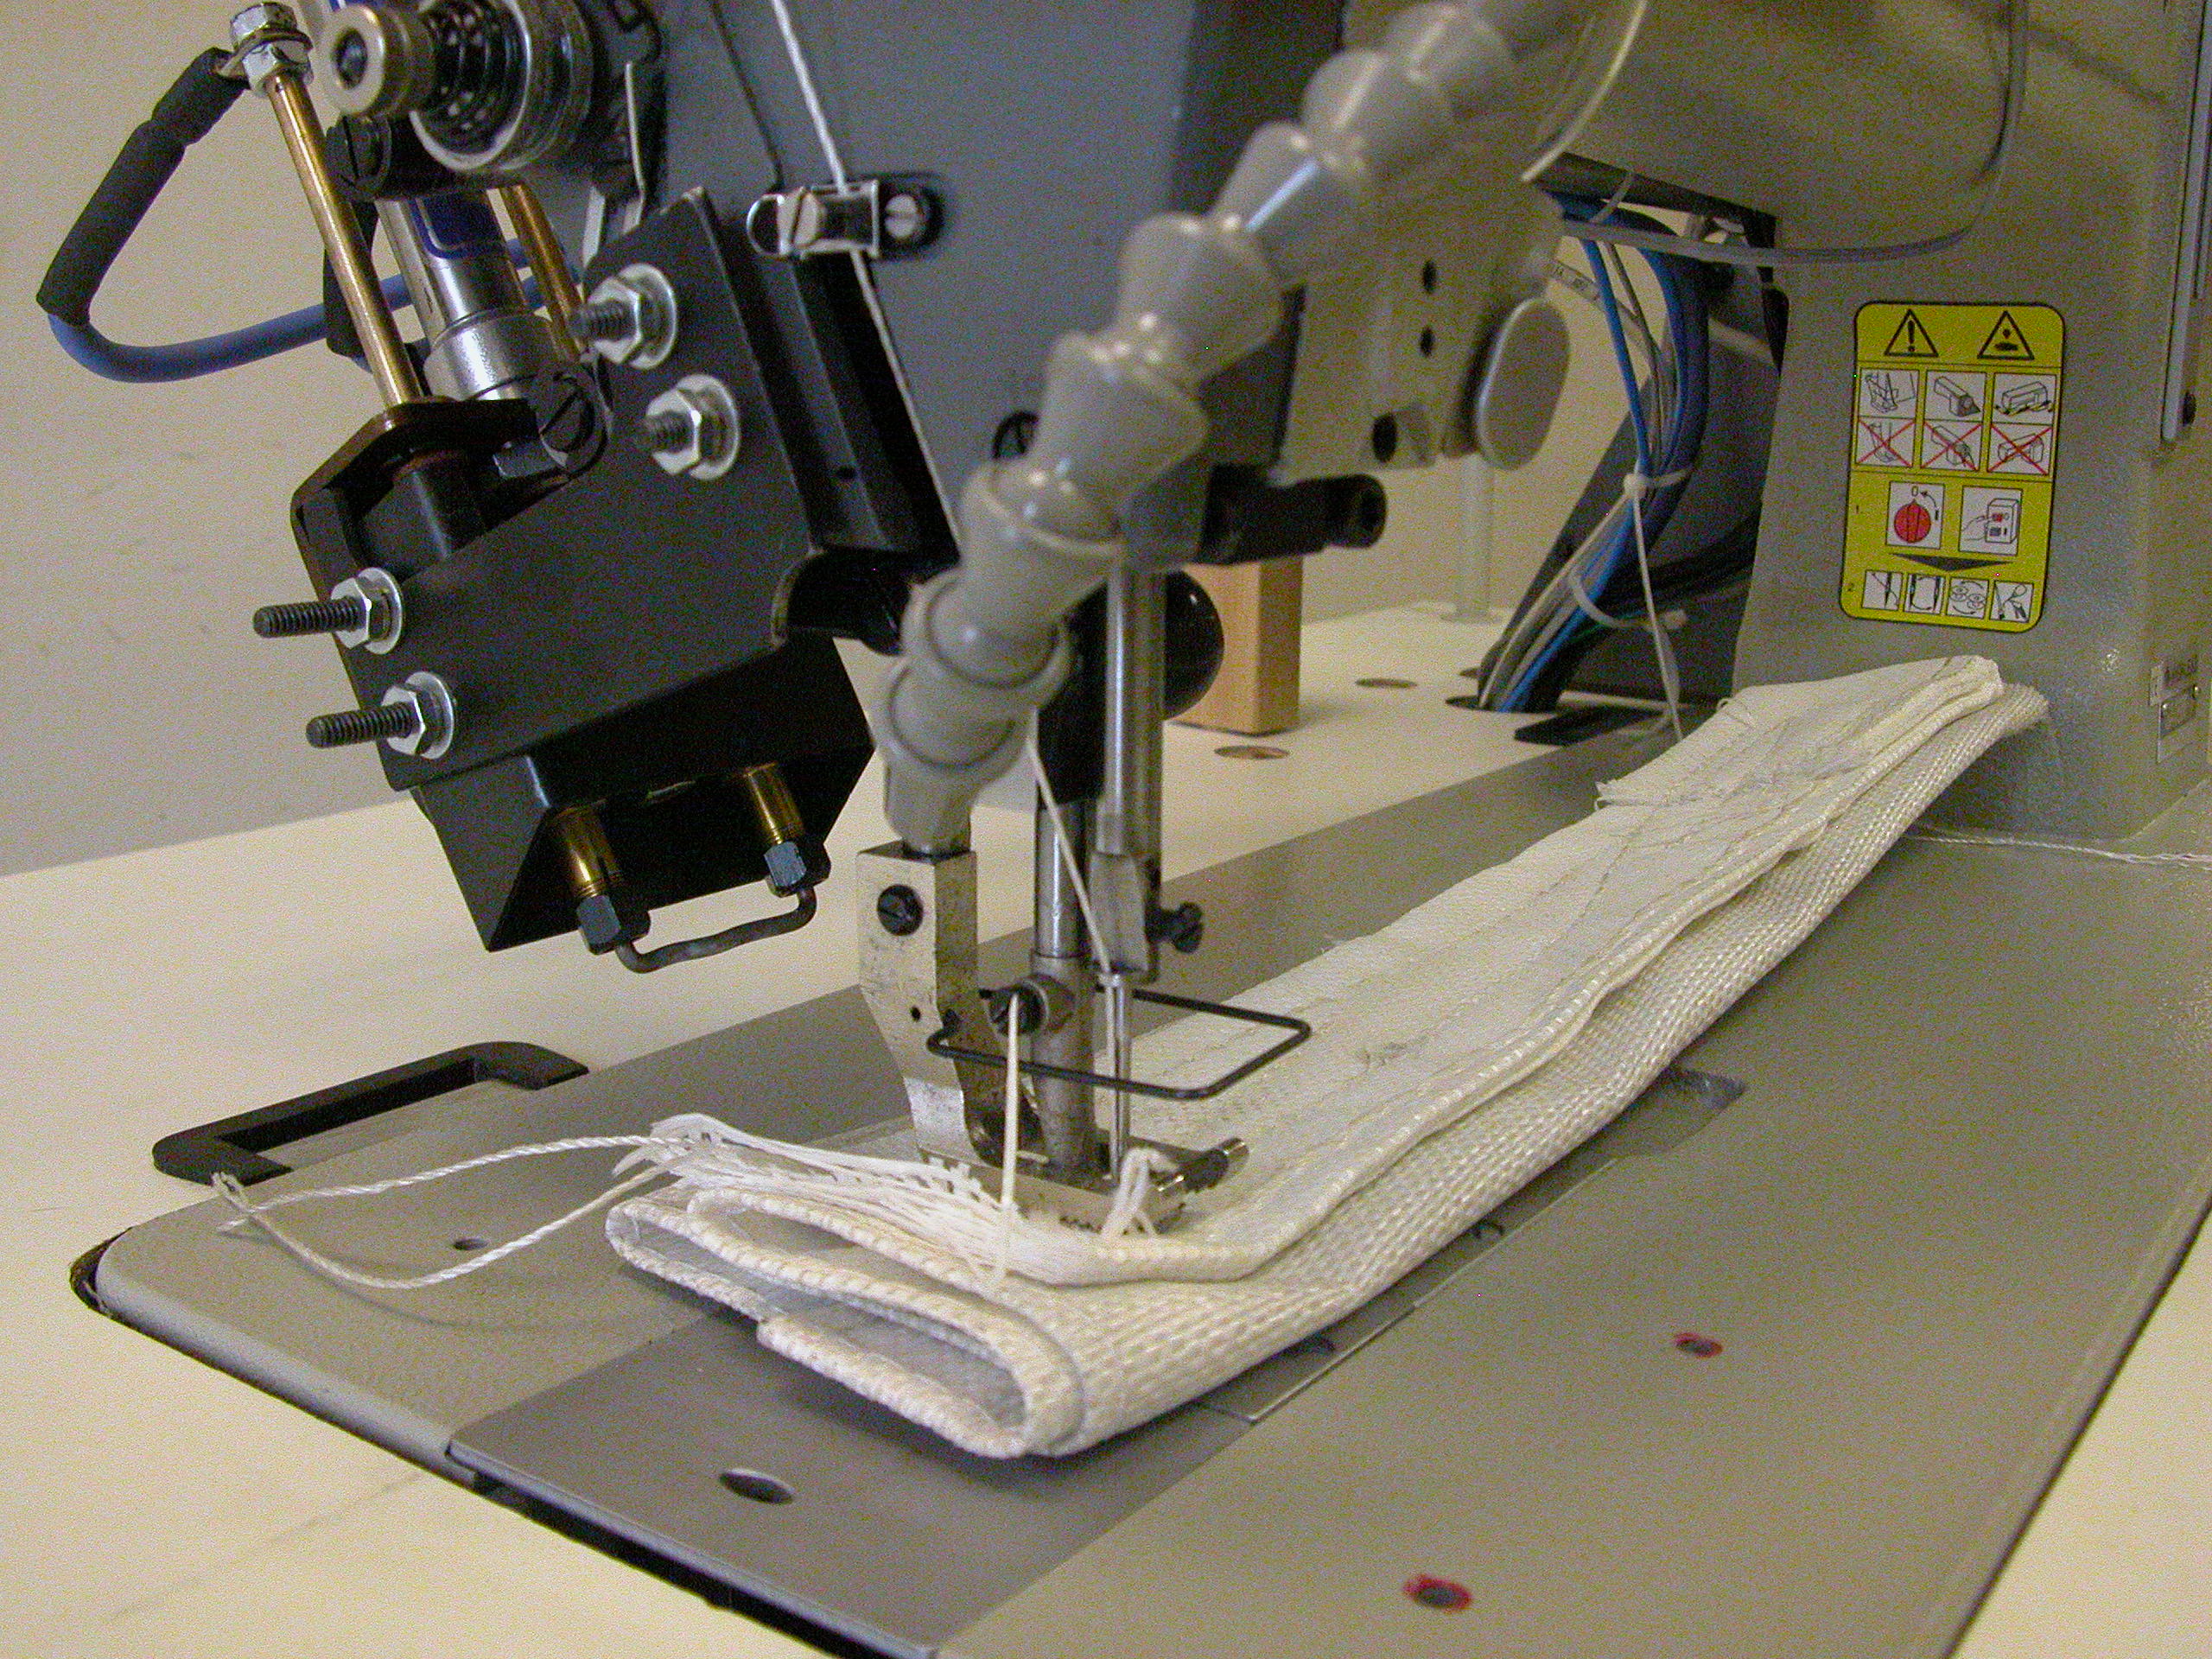 SK-Higlead GA0688-1BB Sewing Machine